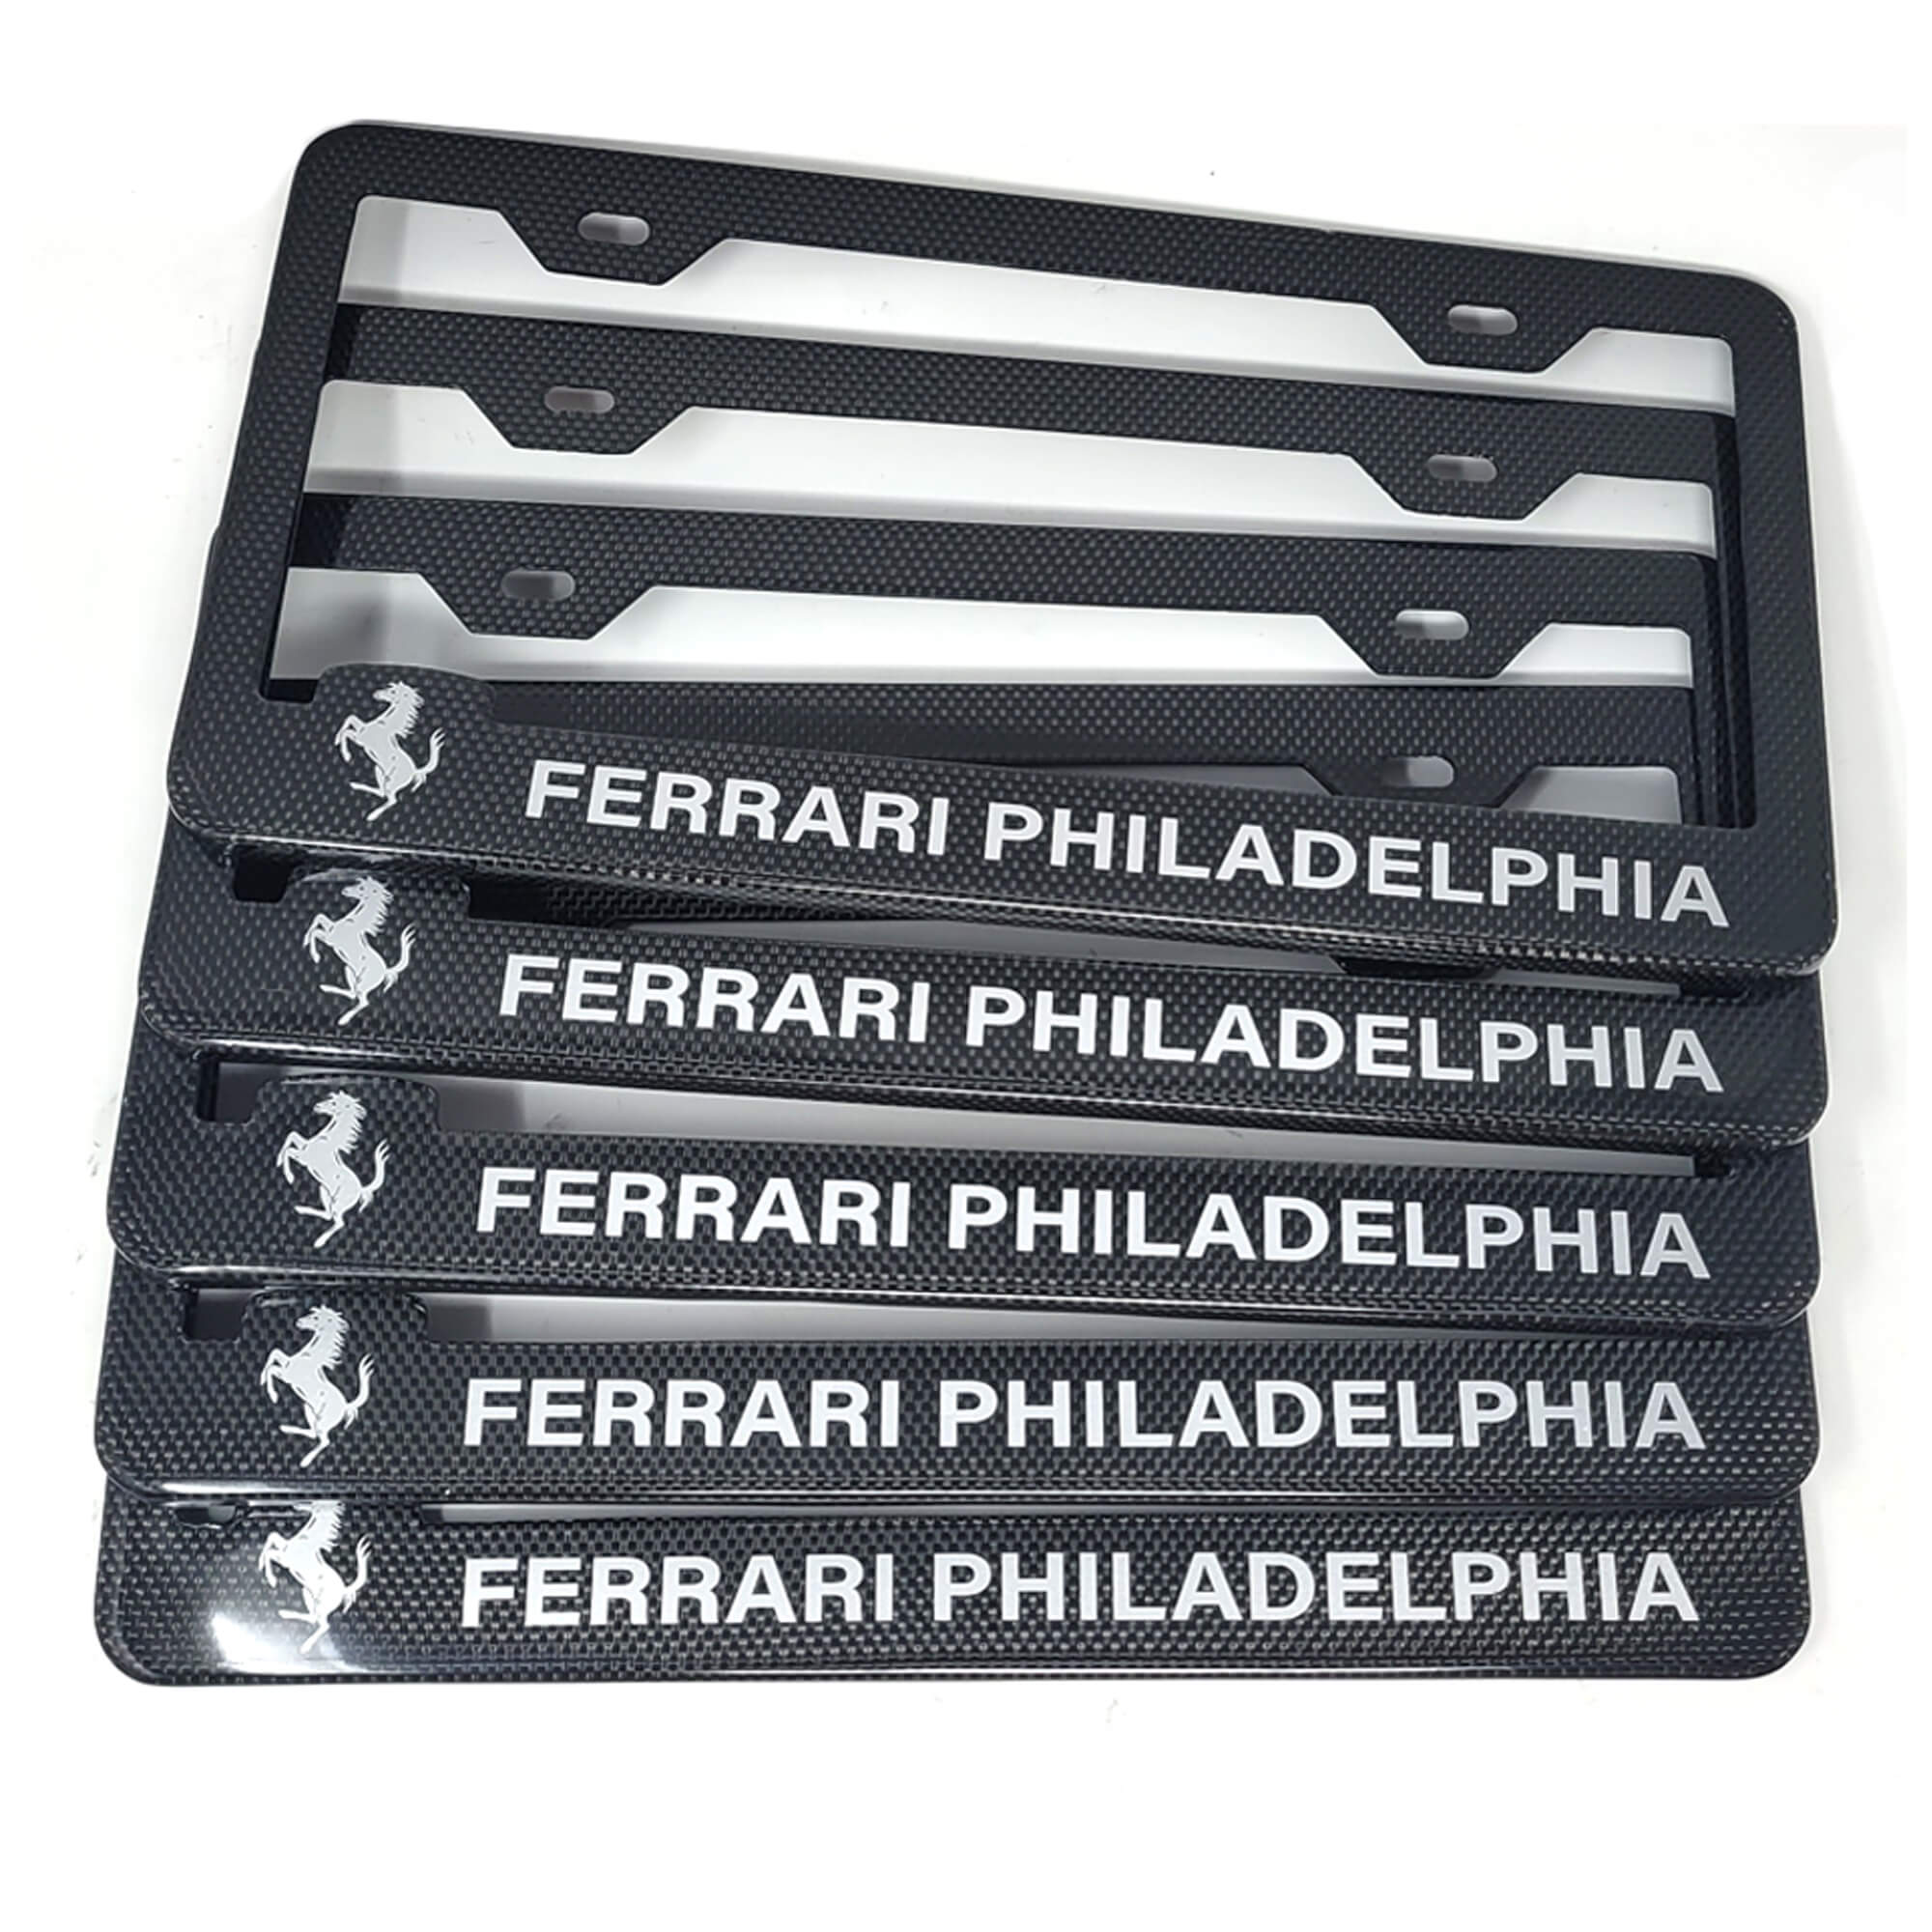 Ferrari-Philadelphia